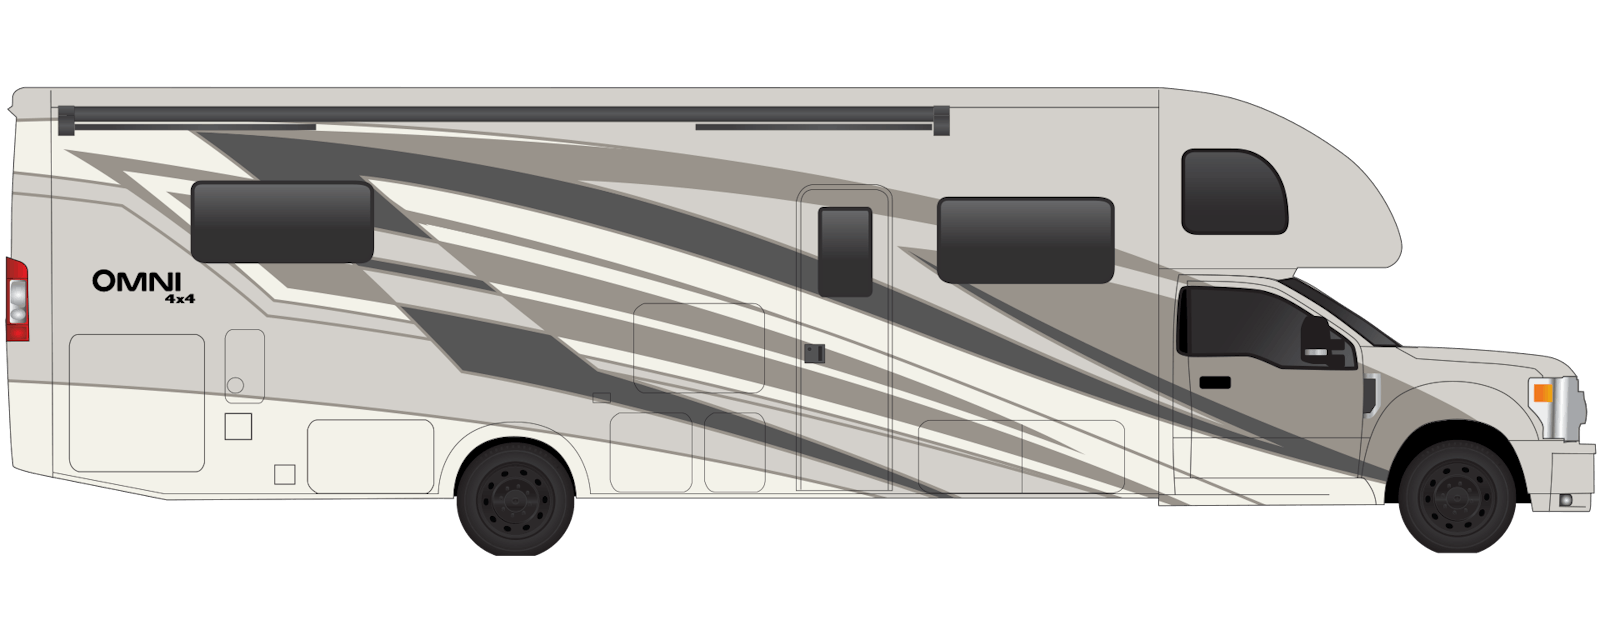 Omni Super C diesel motorhome in westhaven grey and tan exterior